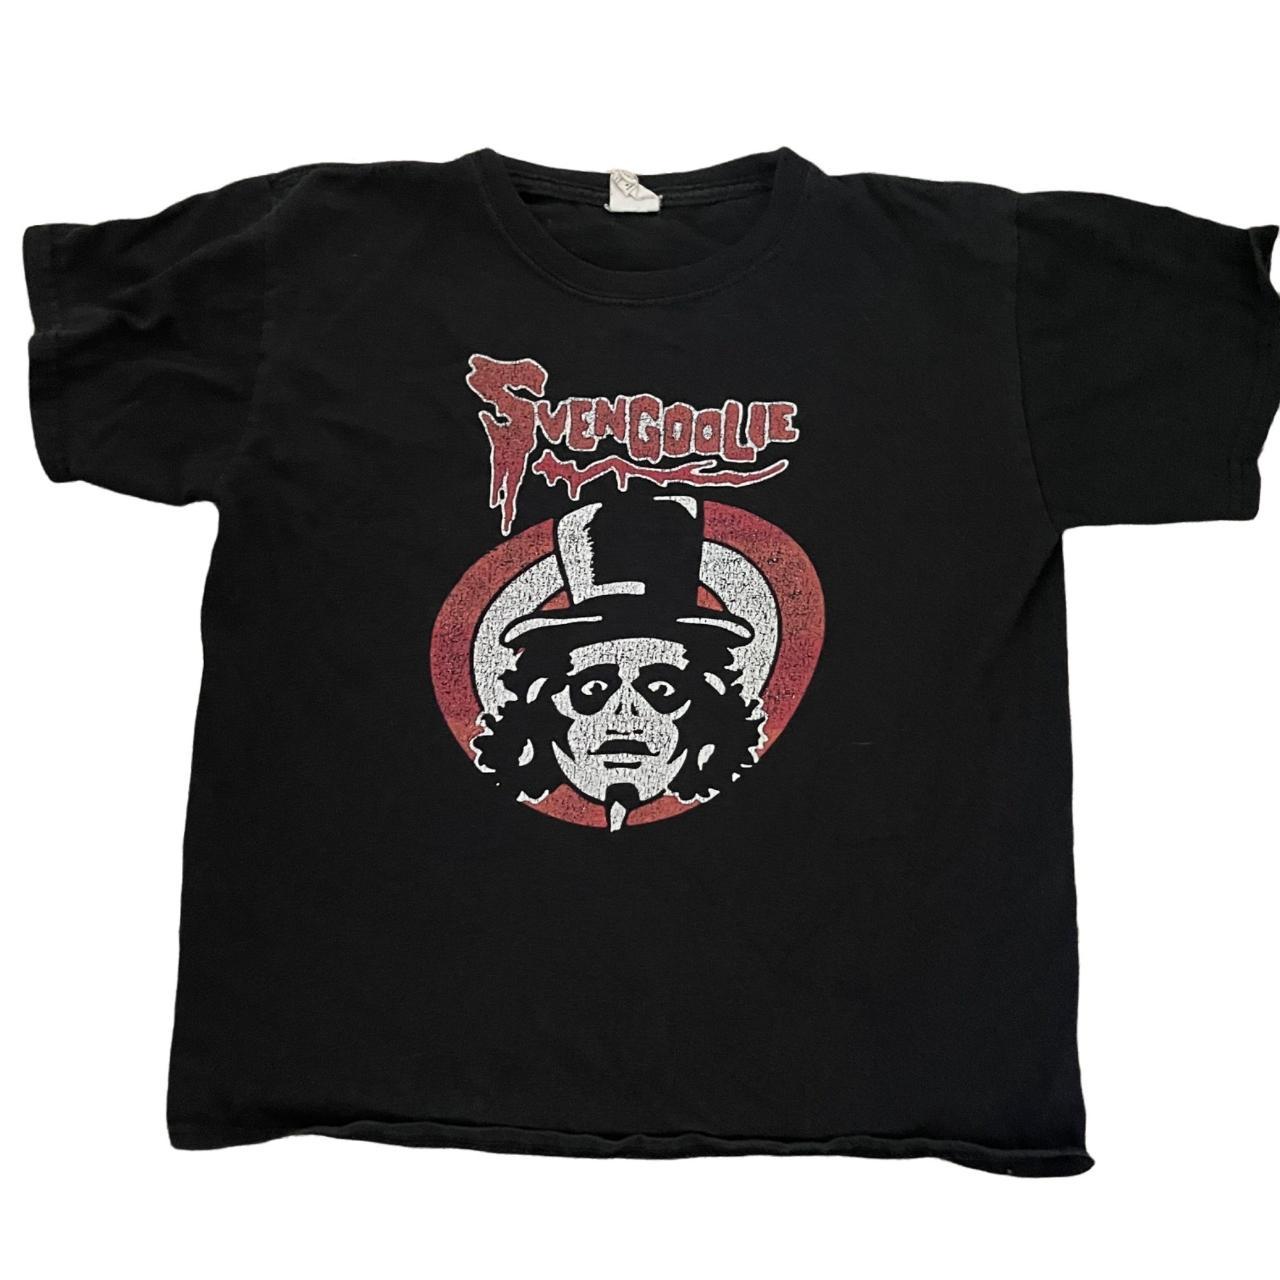 Svengoolie Black Logo Kids T-shirt Size:... - Depop